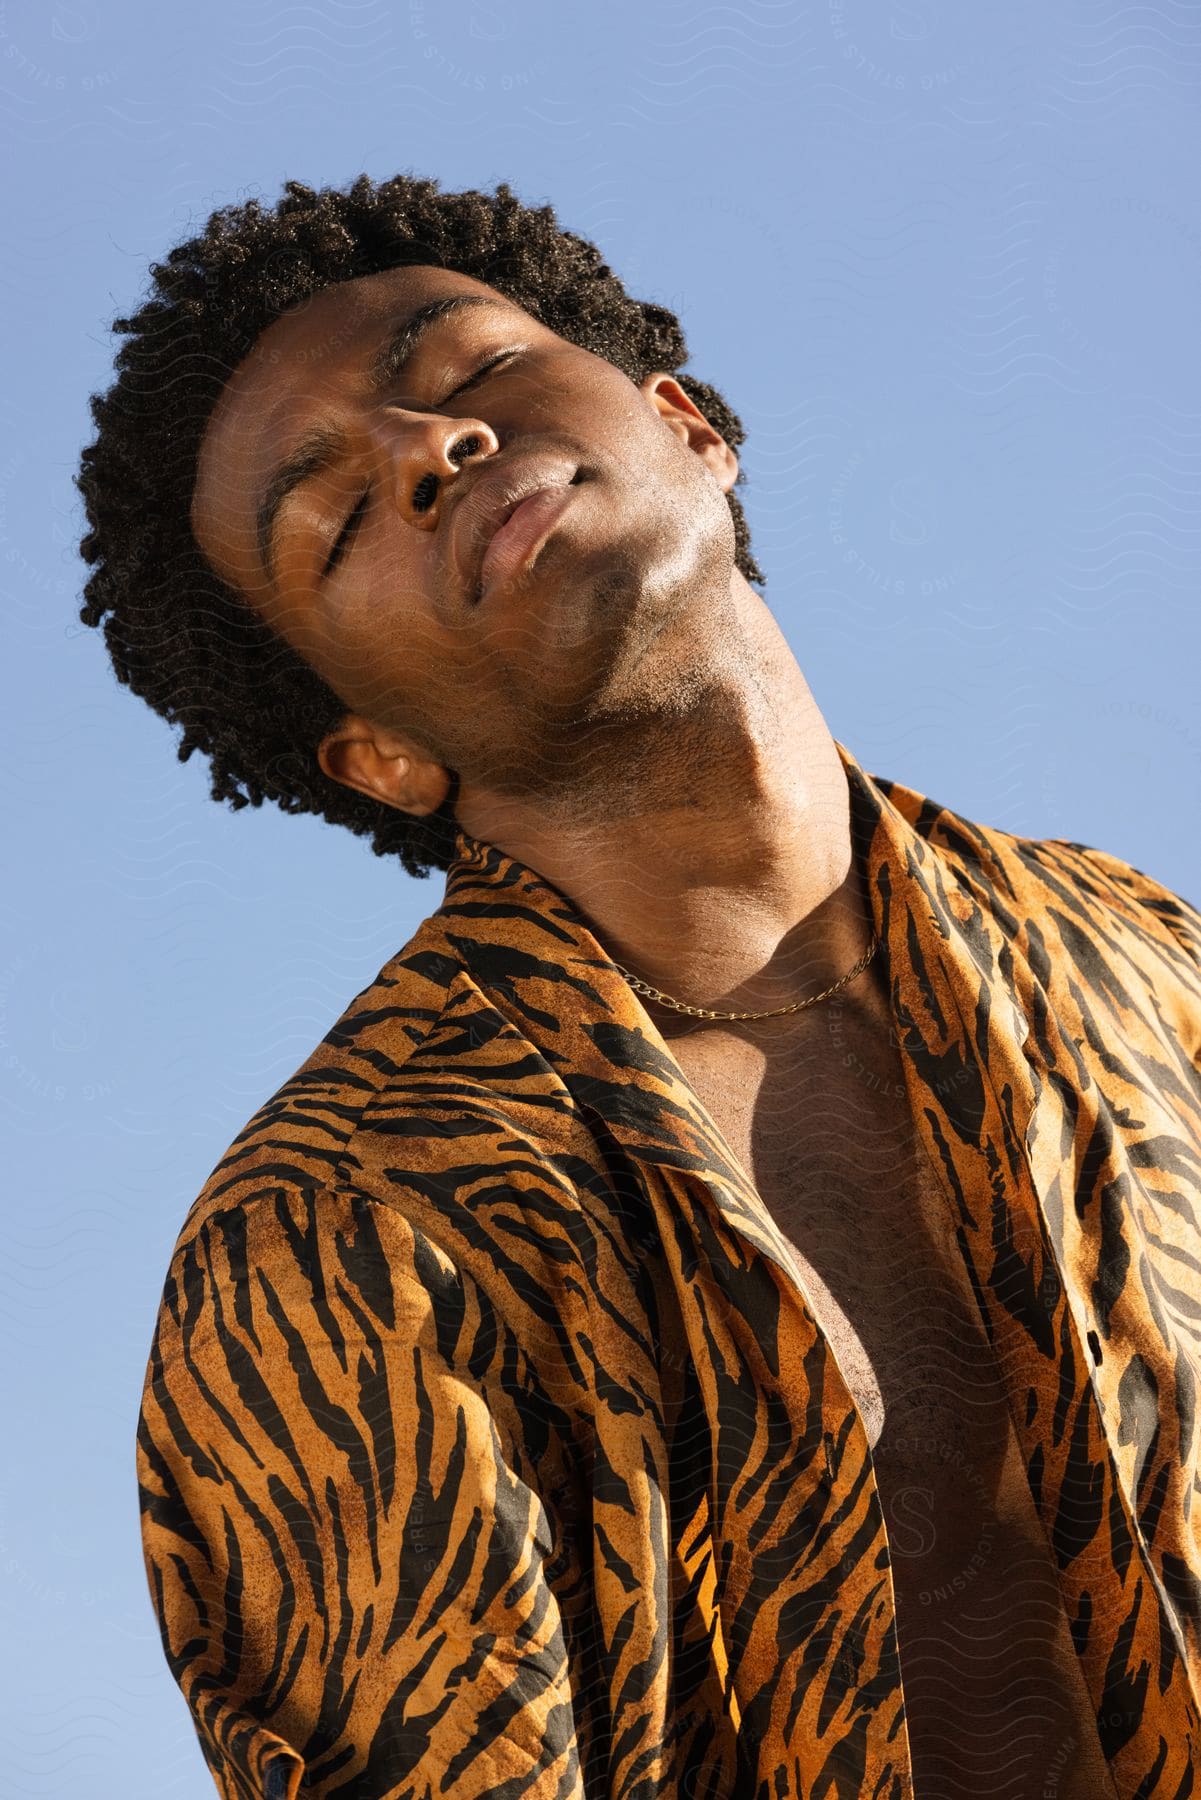 An africanamerican man posing outdoors wearing a tigerstriped shirt